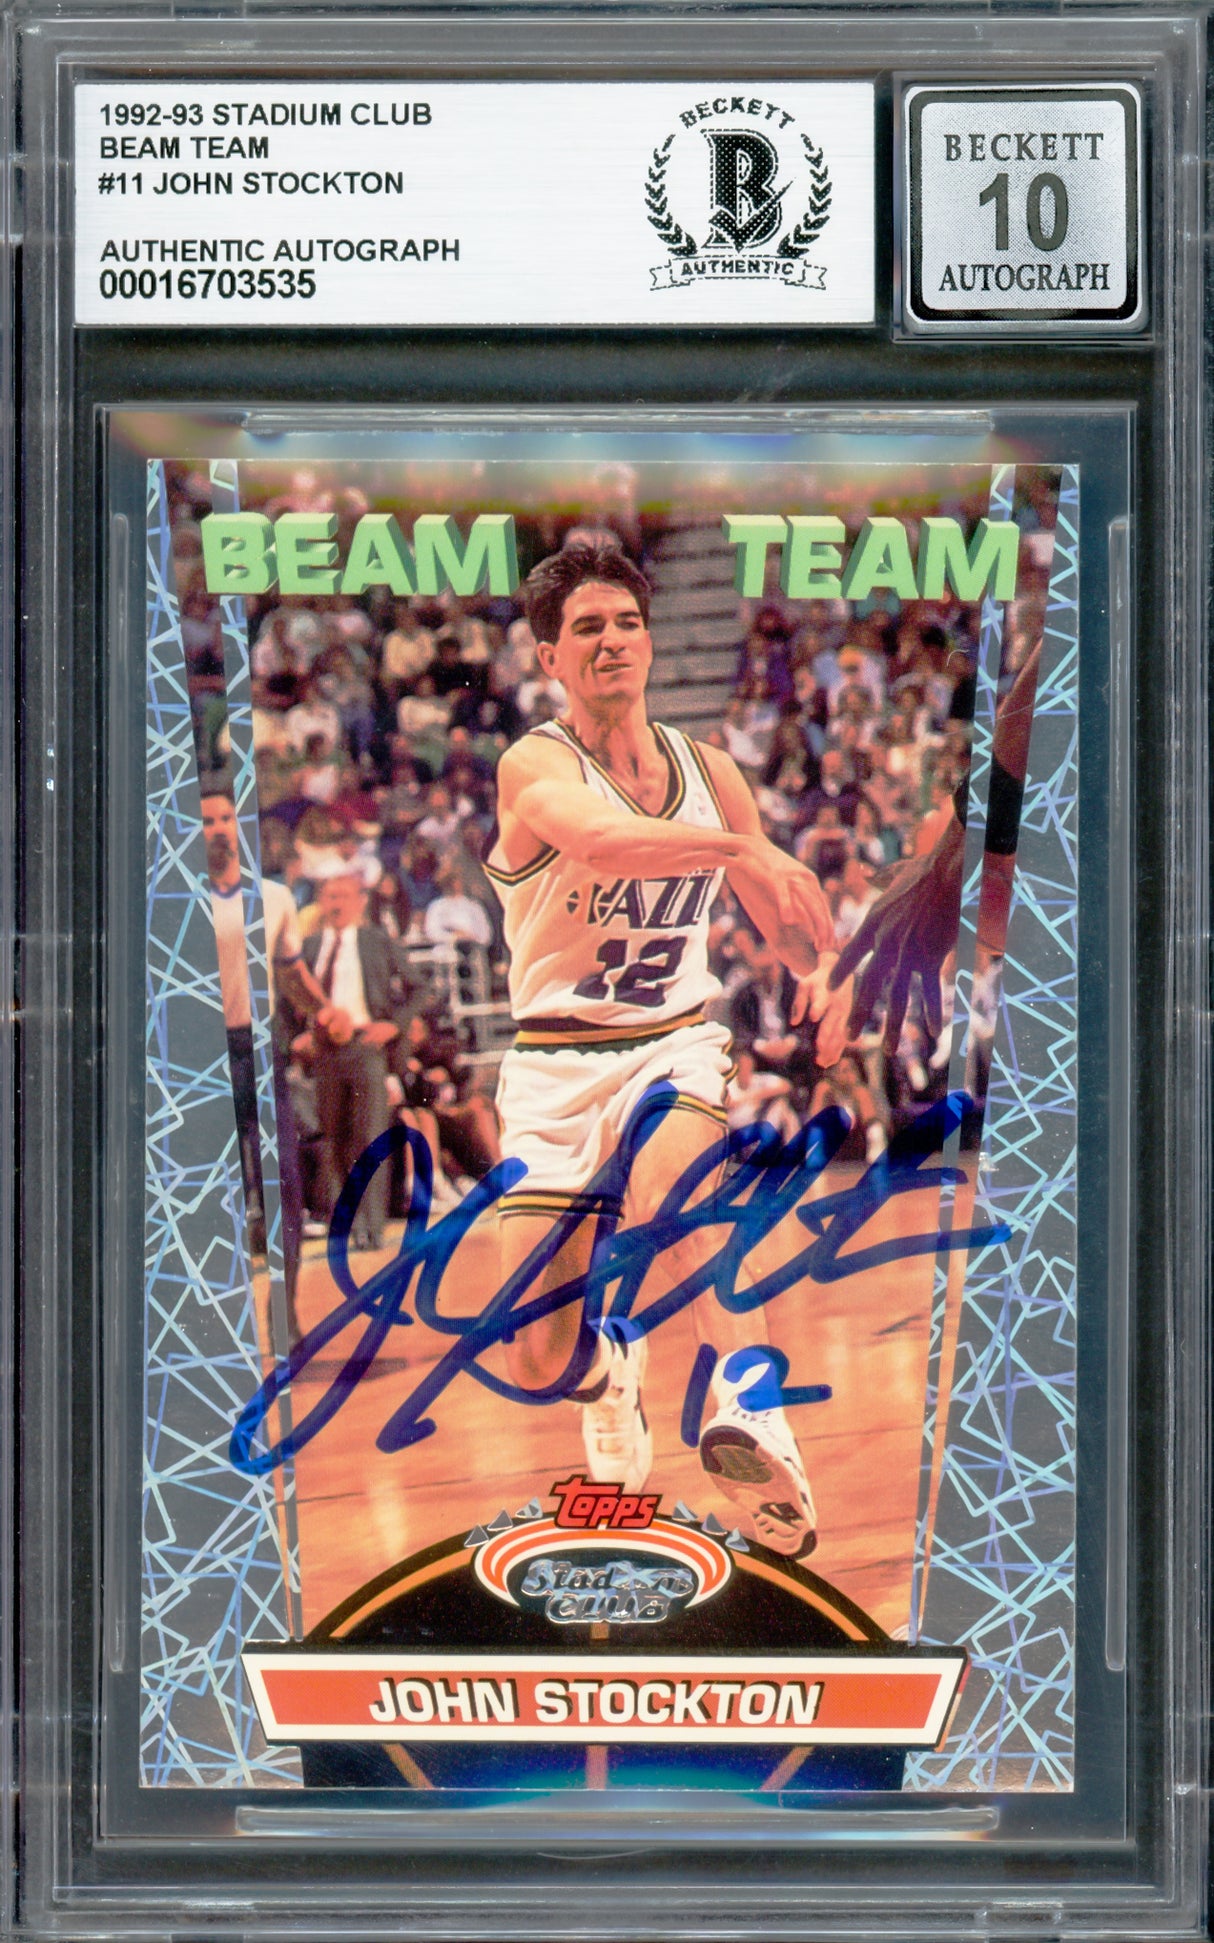 John Stockton Autographed 1992-93 Stadium Club Beam Team Card #11 Utah Jazz Auto Grade Gem Mint 10 Beckett BAS #16703535